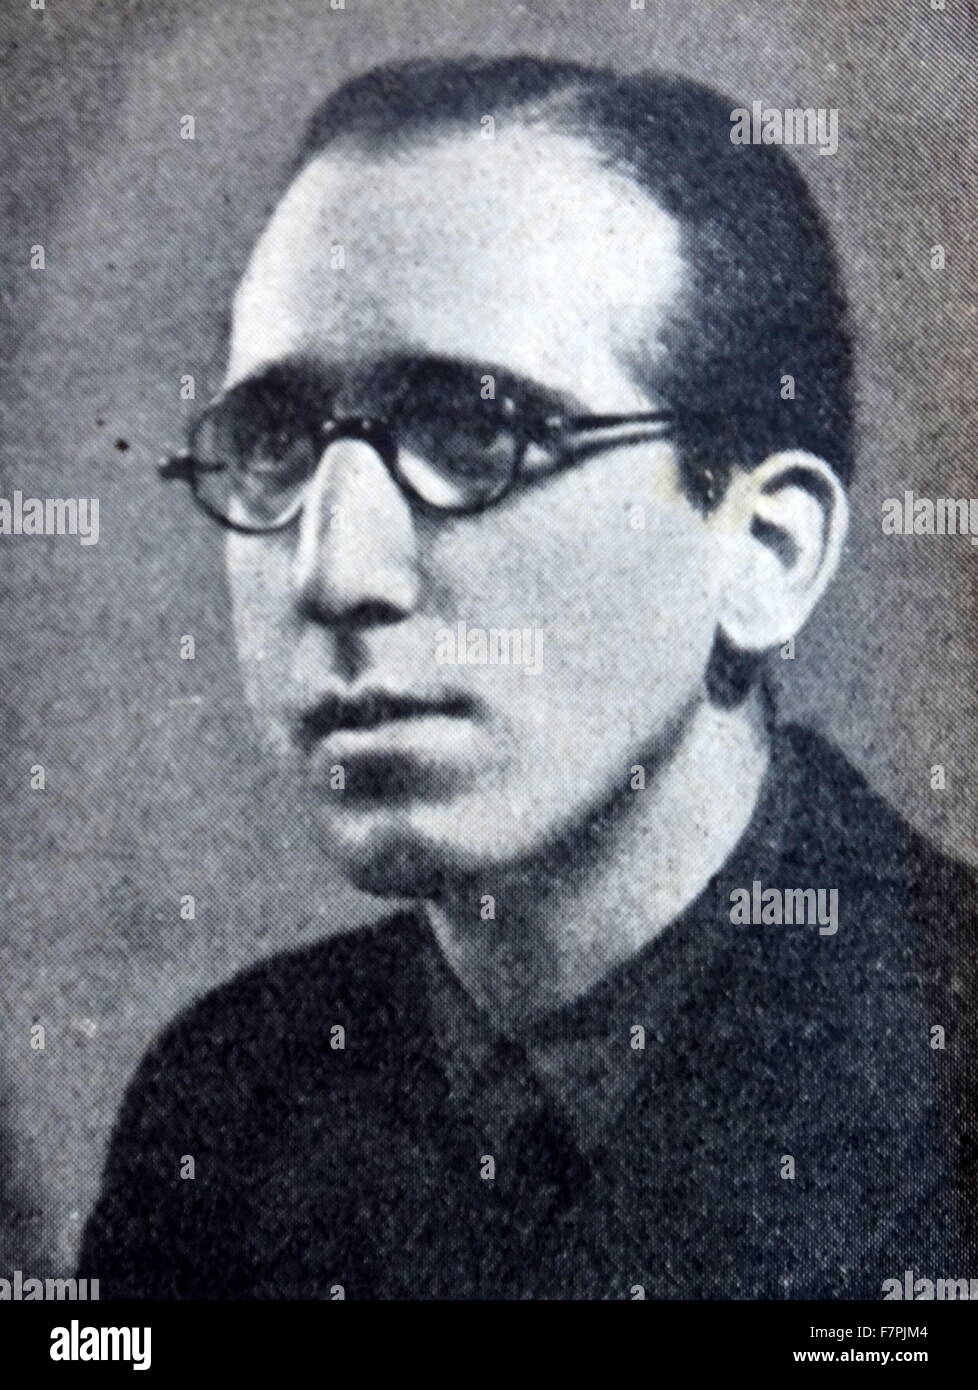 Pablo Ruiz de Aldea head of the Falange in Estella, Navarre, Spain, during the Spanish Civil War. Dated 1936 Stock Photo